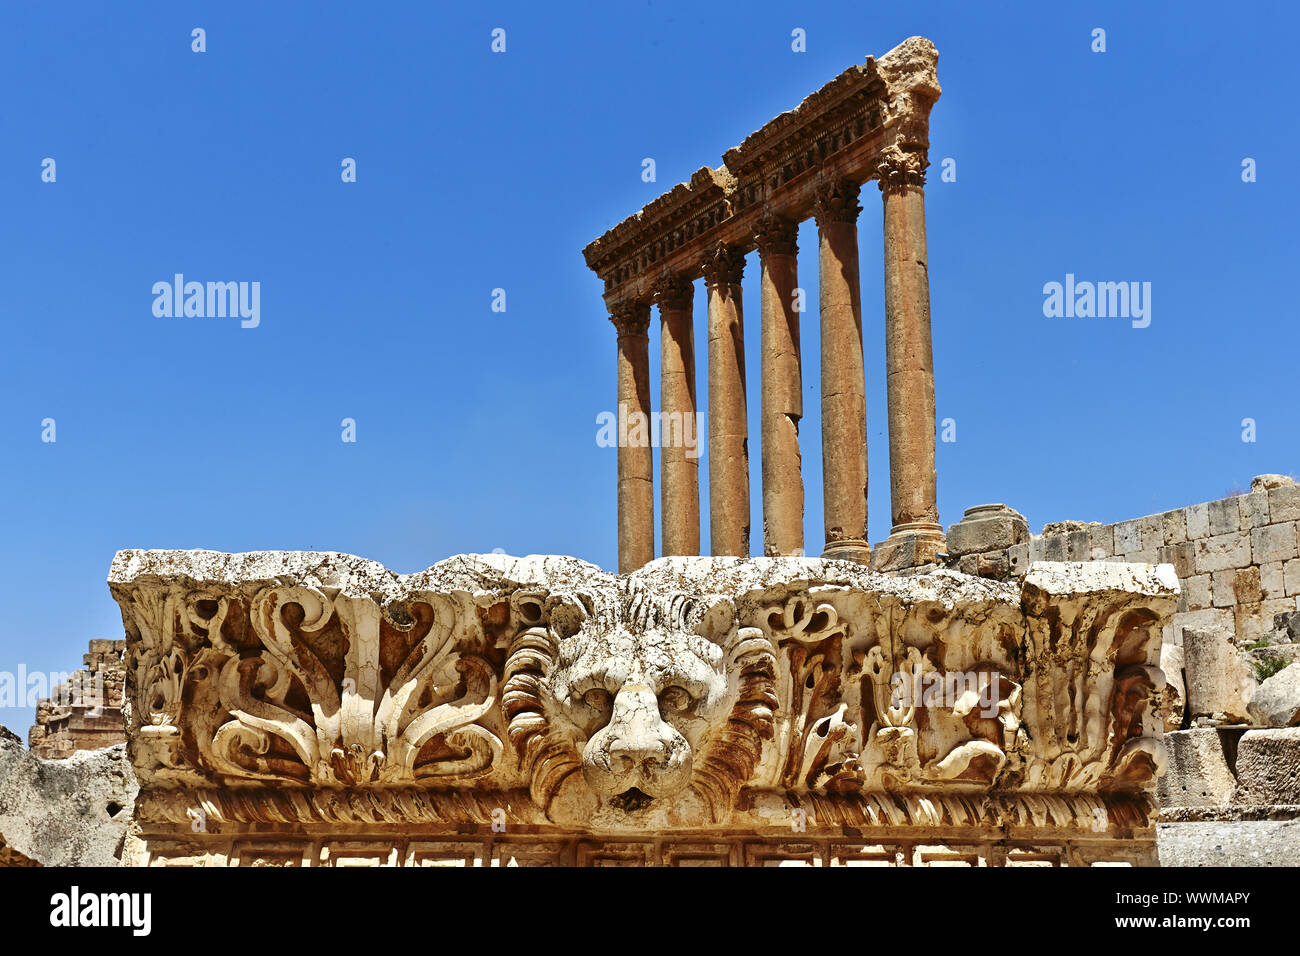 Les colonnes de Jupiter et baalbek lion (Temple de Jupiter) - Baalbek, Liban Banque D'Images